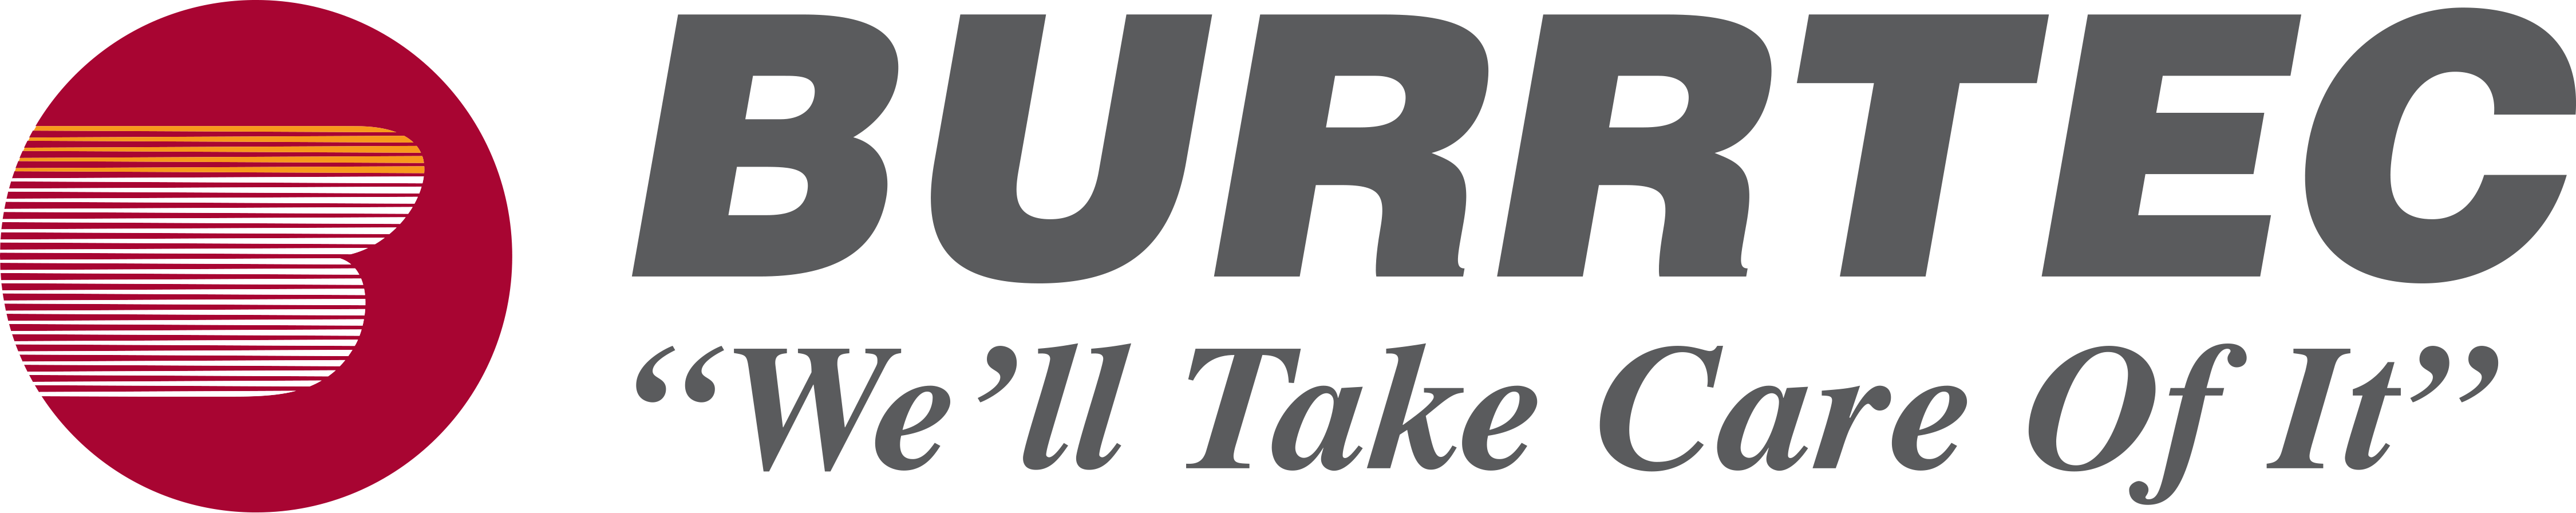 Burrtec logo